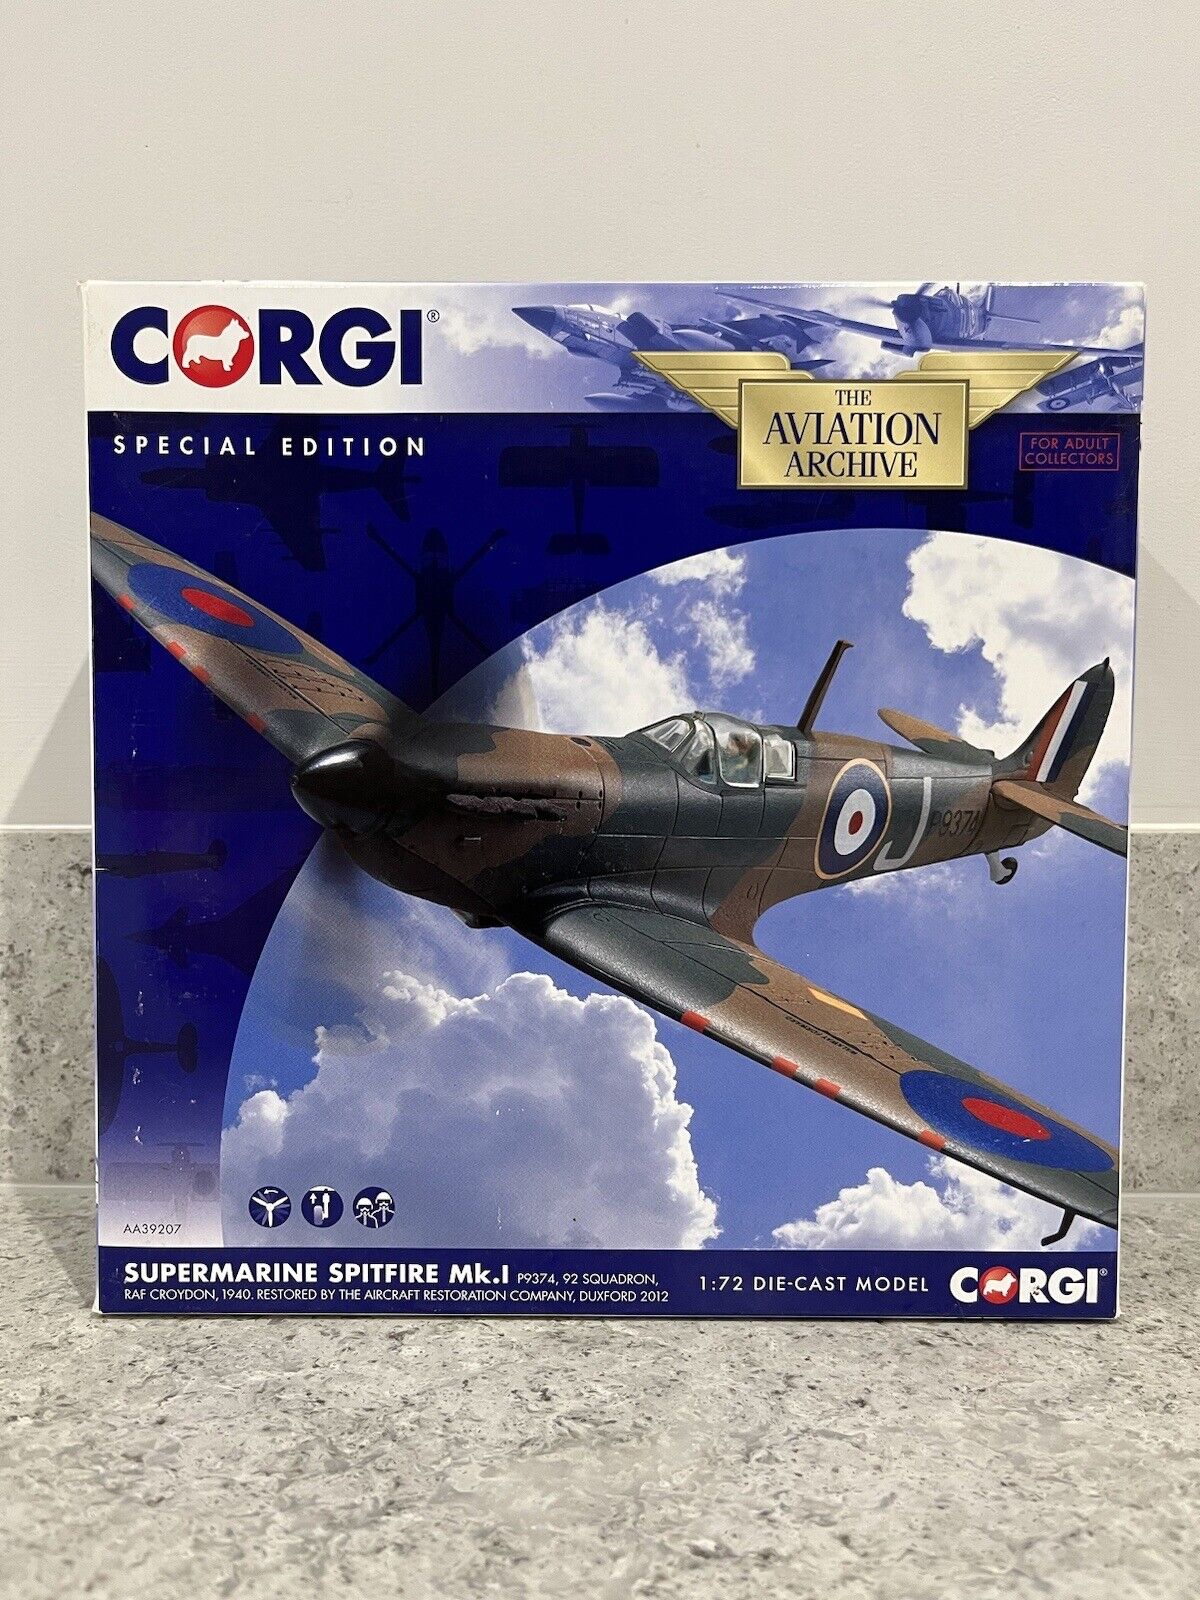 Corgi - Supermarine Spitfire Mk.1 - RAF Croydon - AA39207 - 1:72 - Brand New